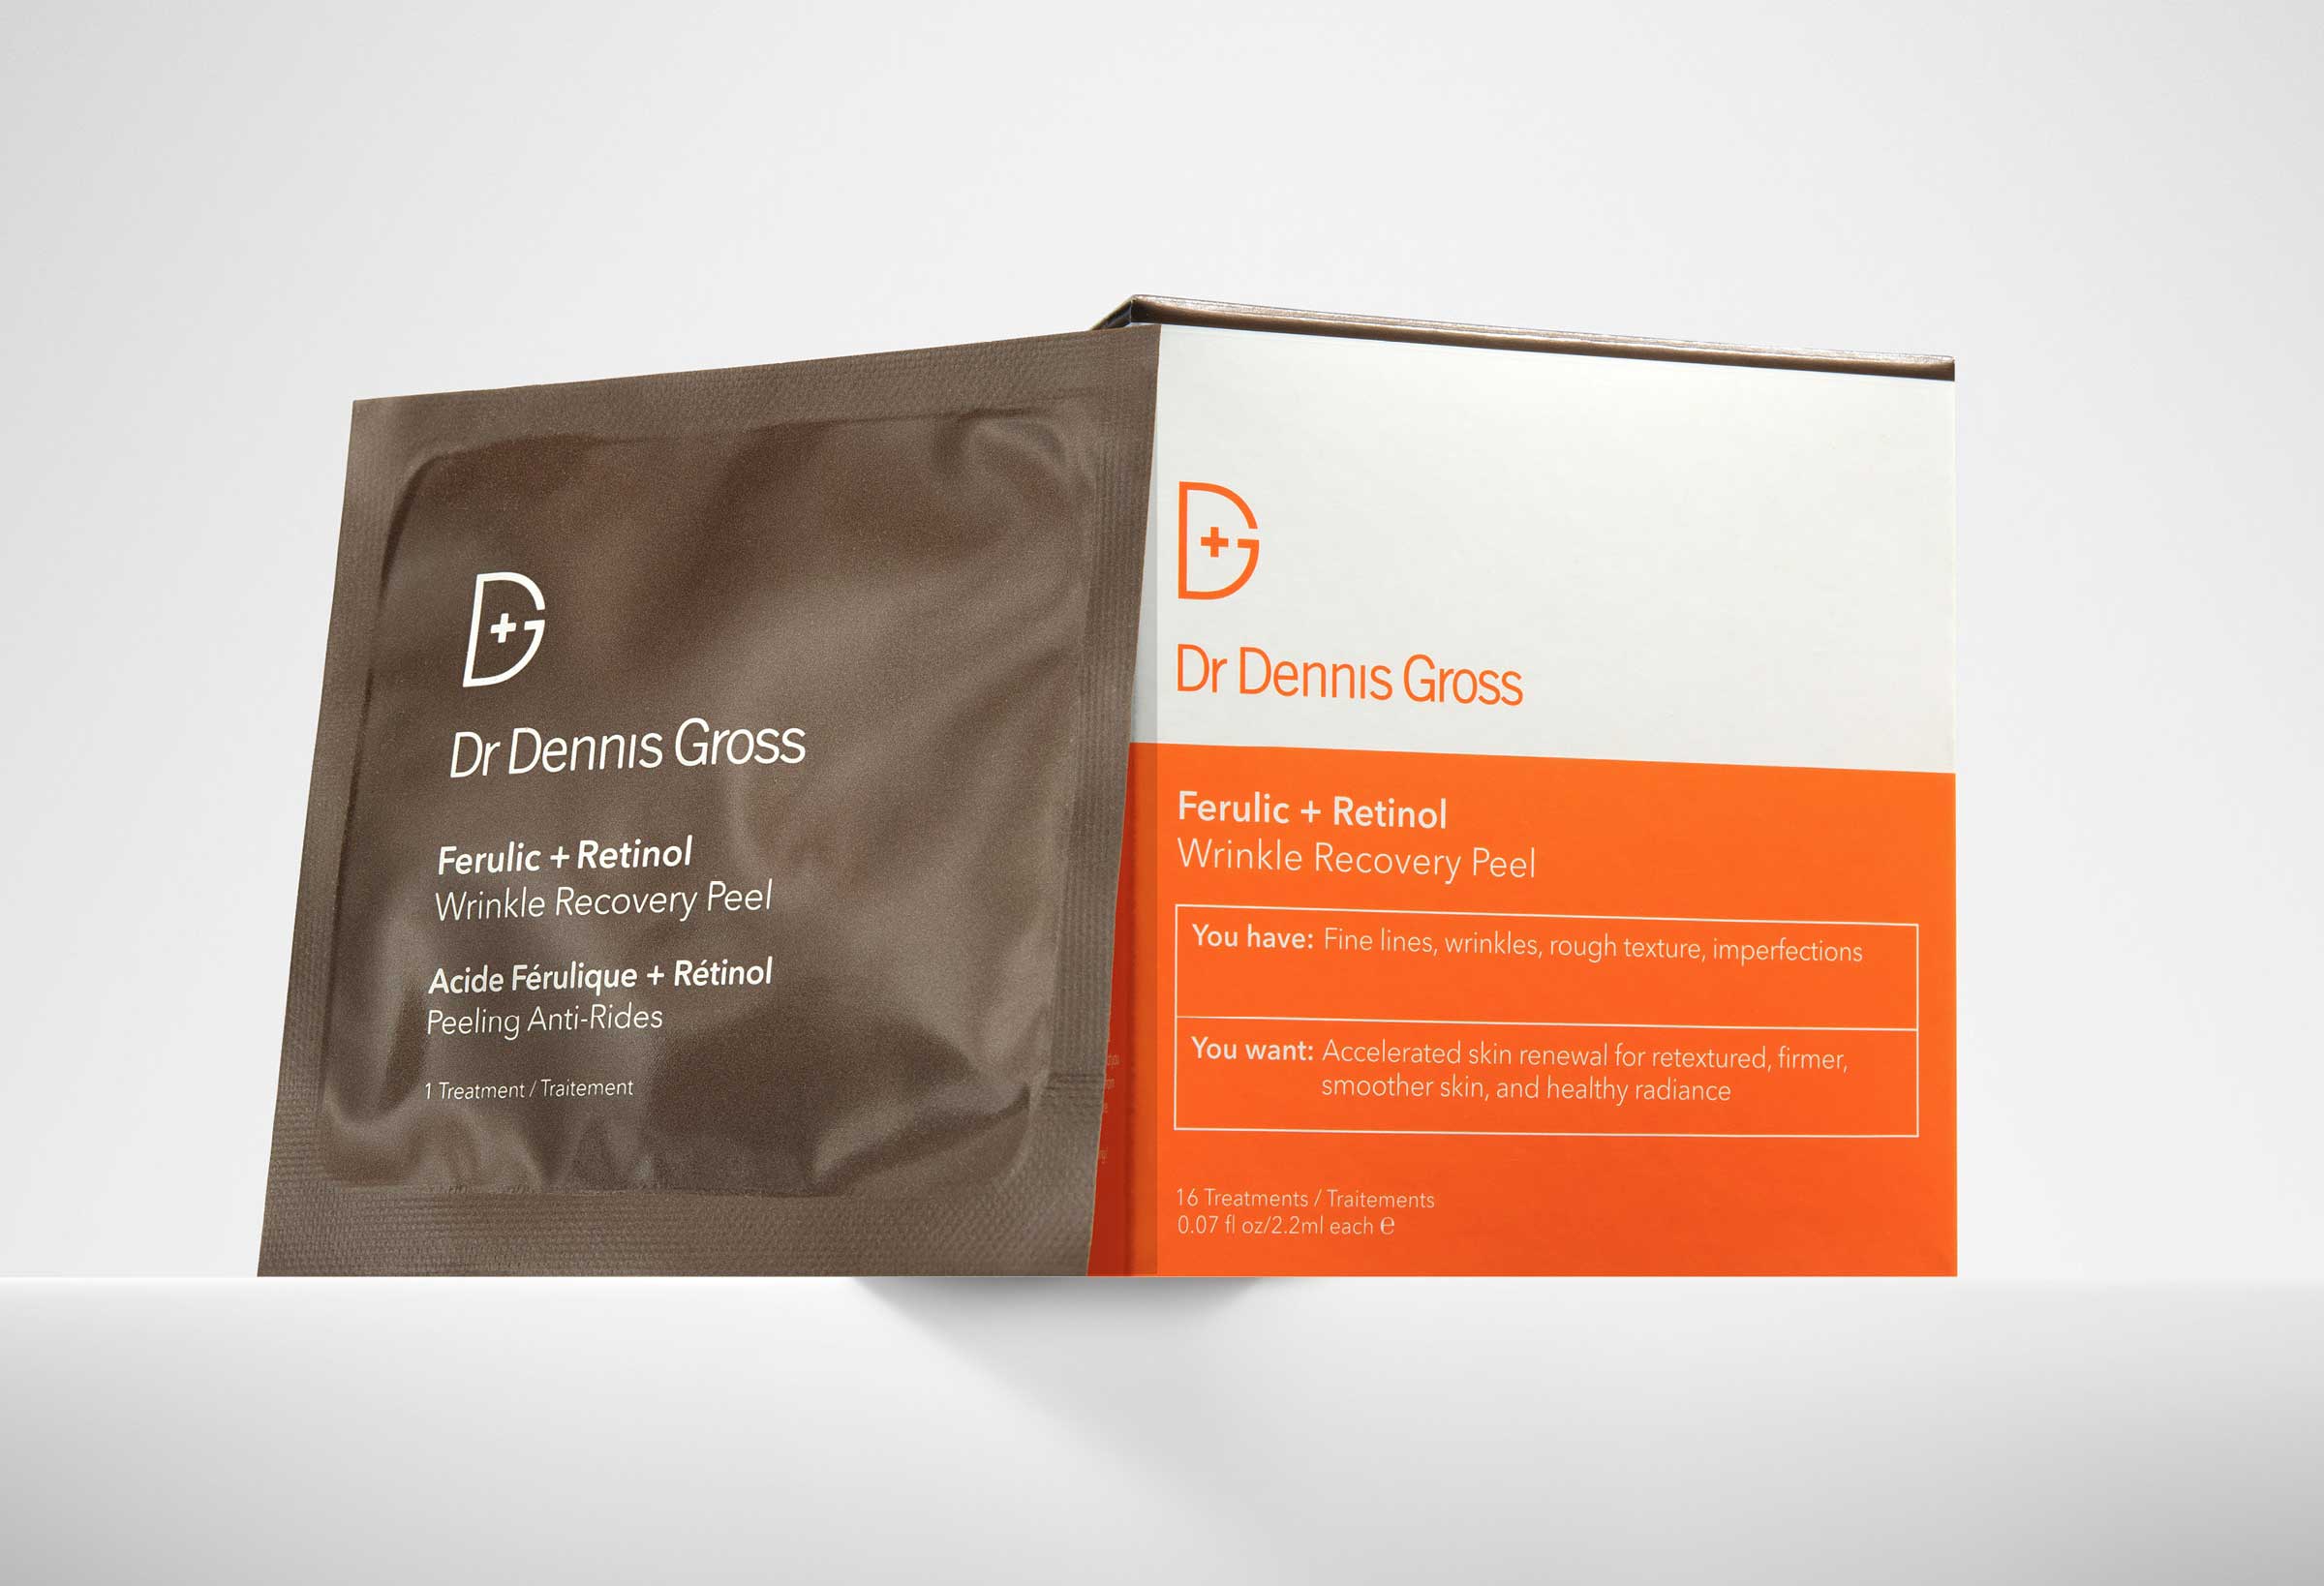 Dr. Dennis Gross Skincare Ferulic + Retinol Wrinkle Recovery Peel